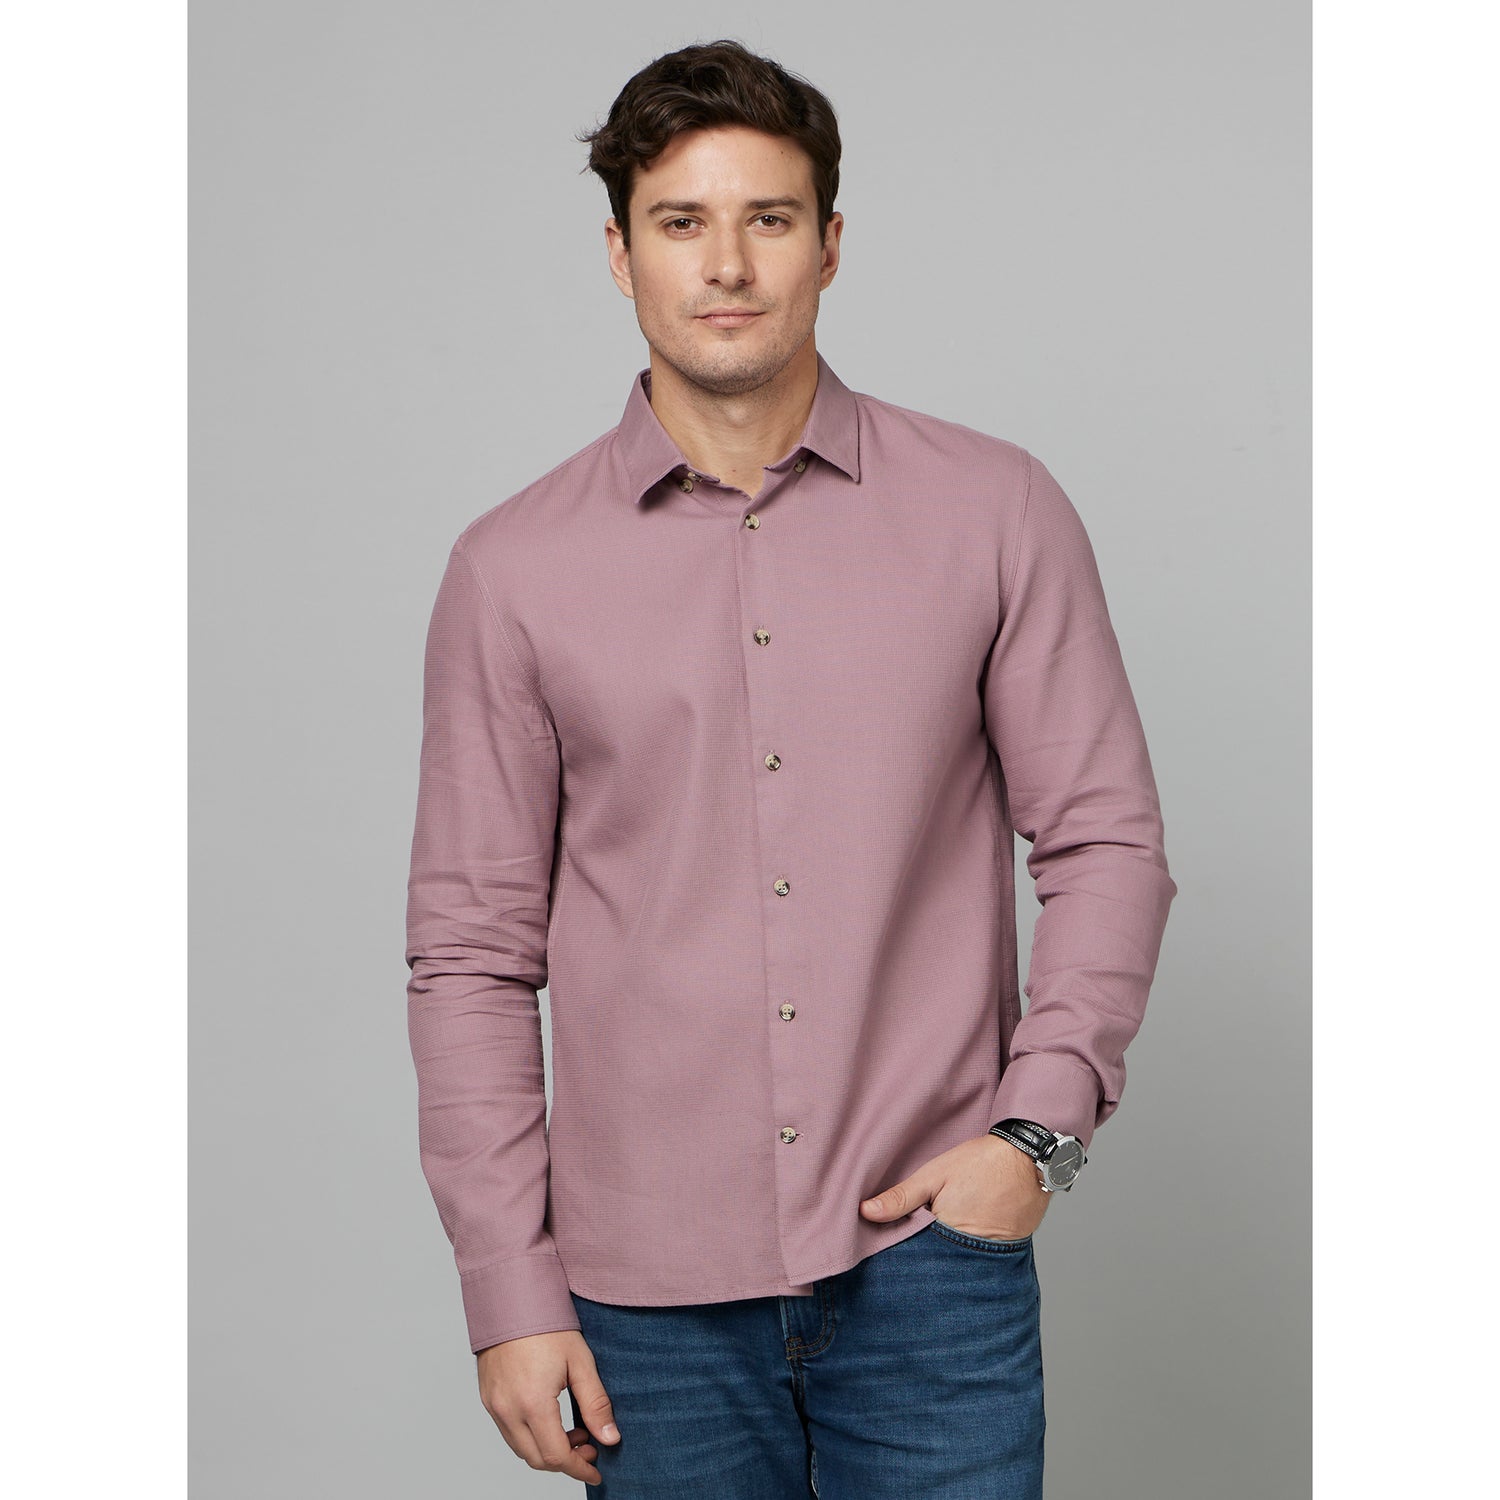 Pink Classic Opaque Cotton Casual Shirt (FATEXTURE)